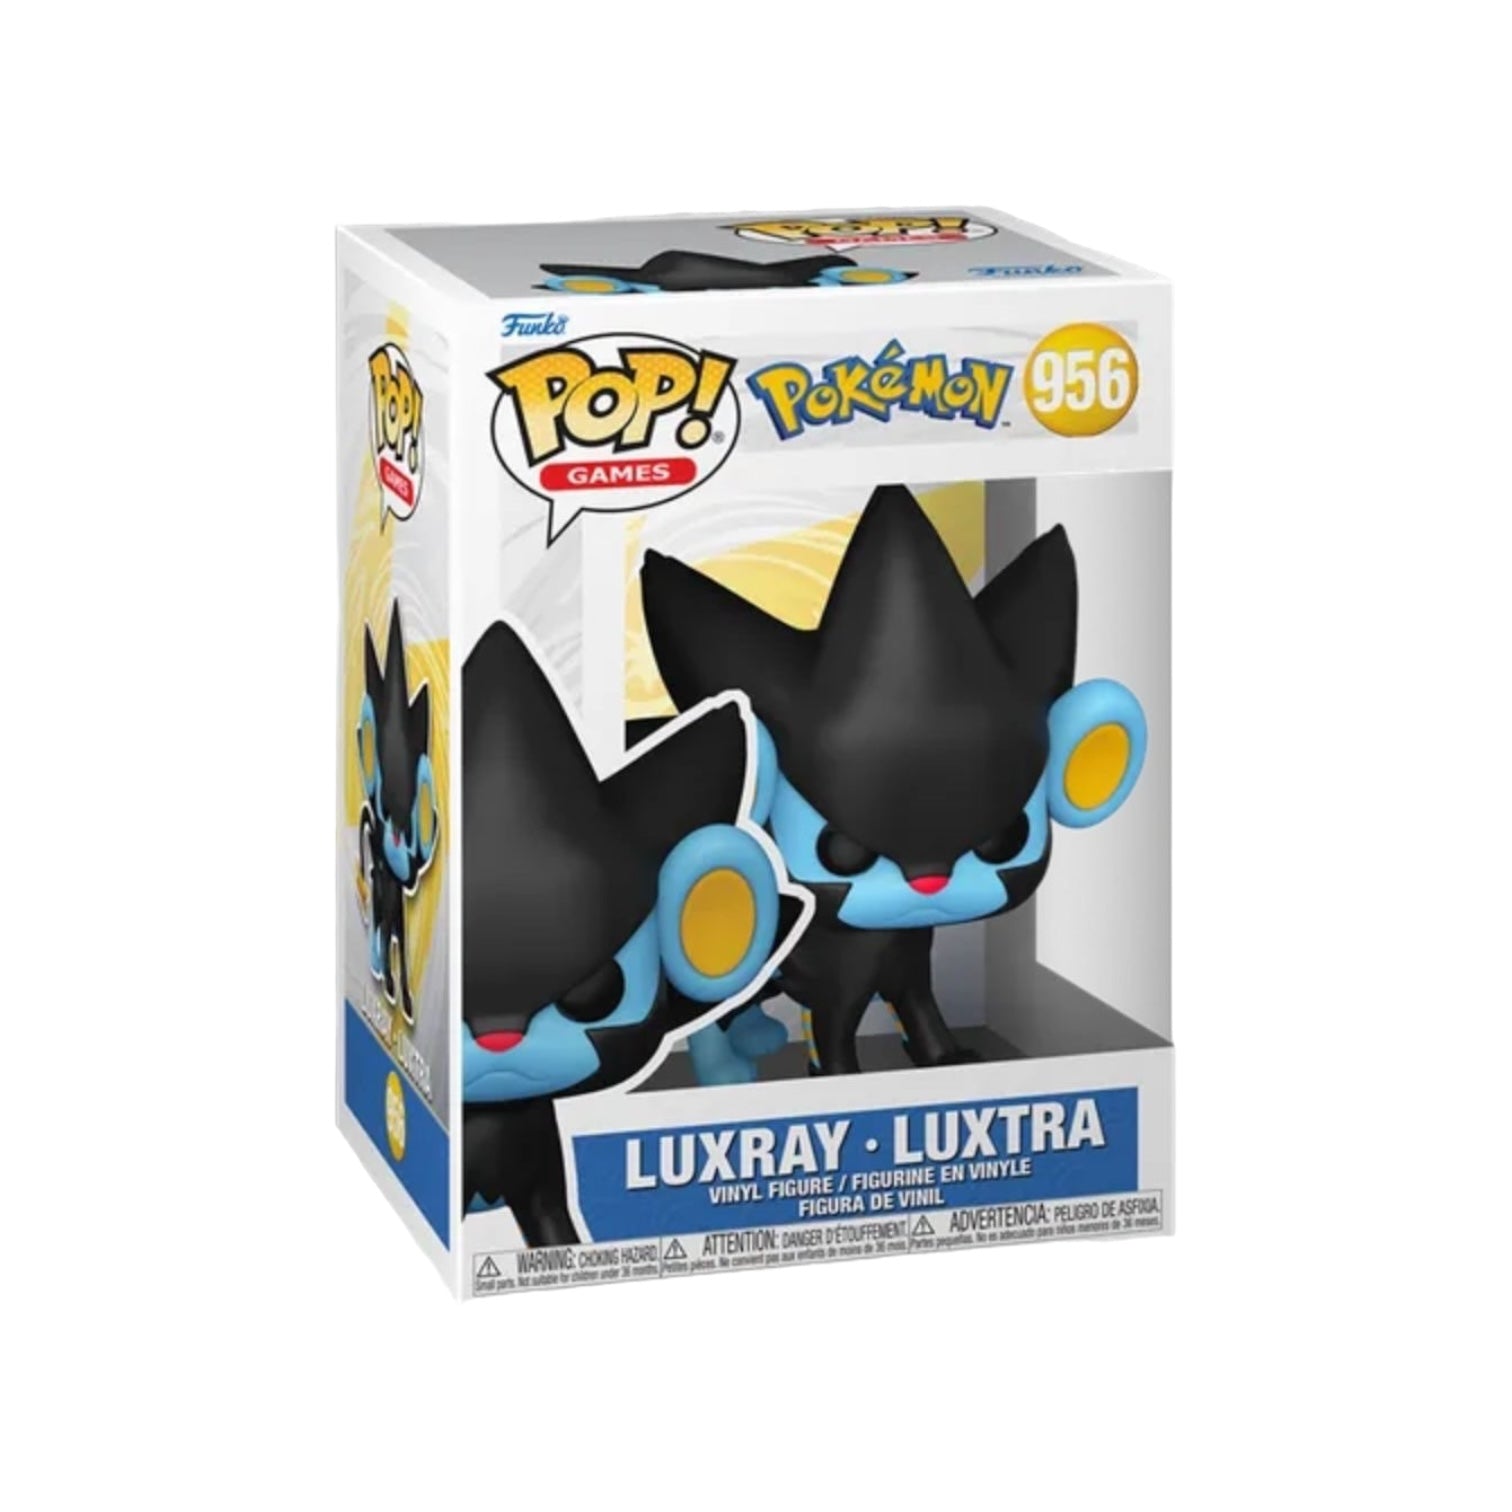 Luxray. Luxtra #956 Funko Pop! - Pokémon